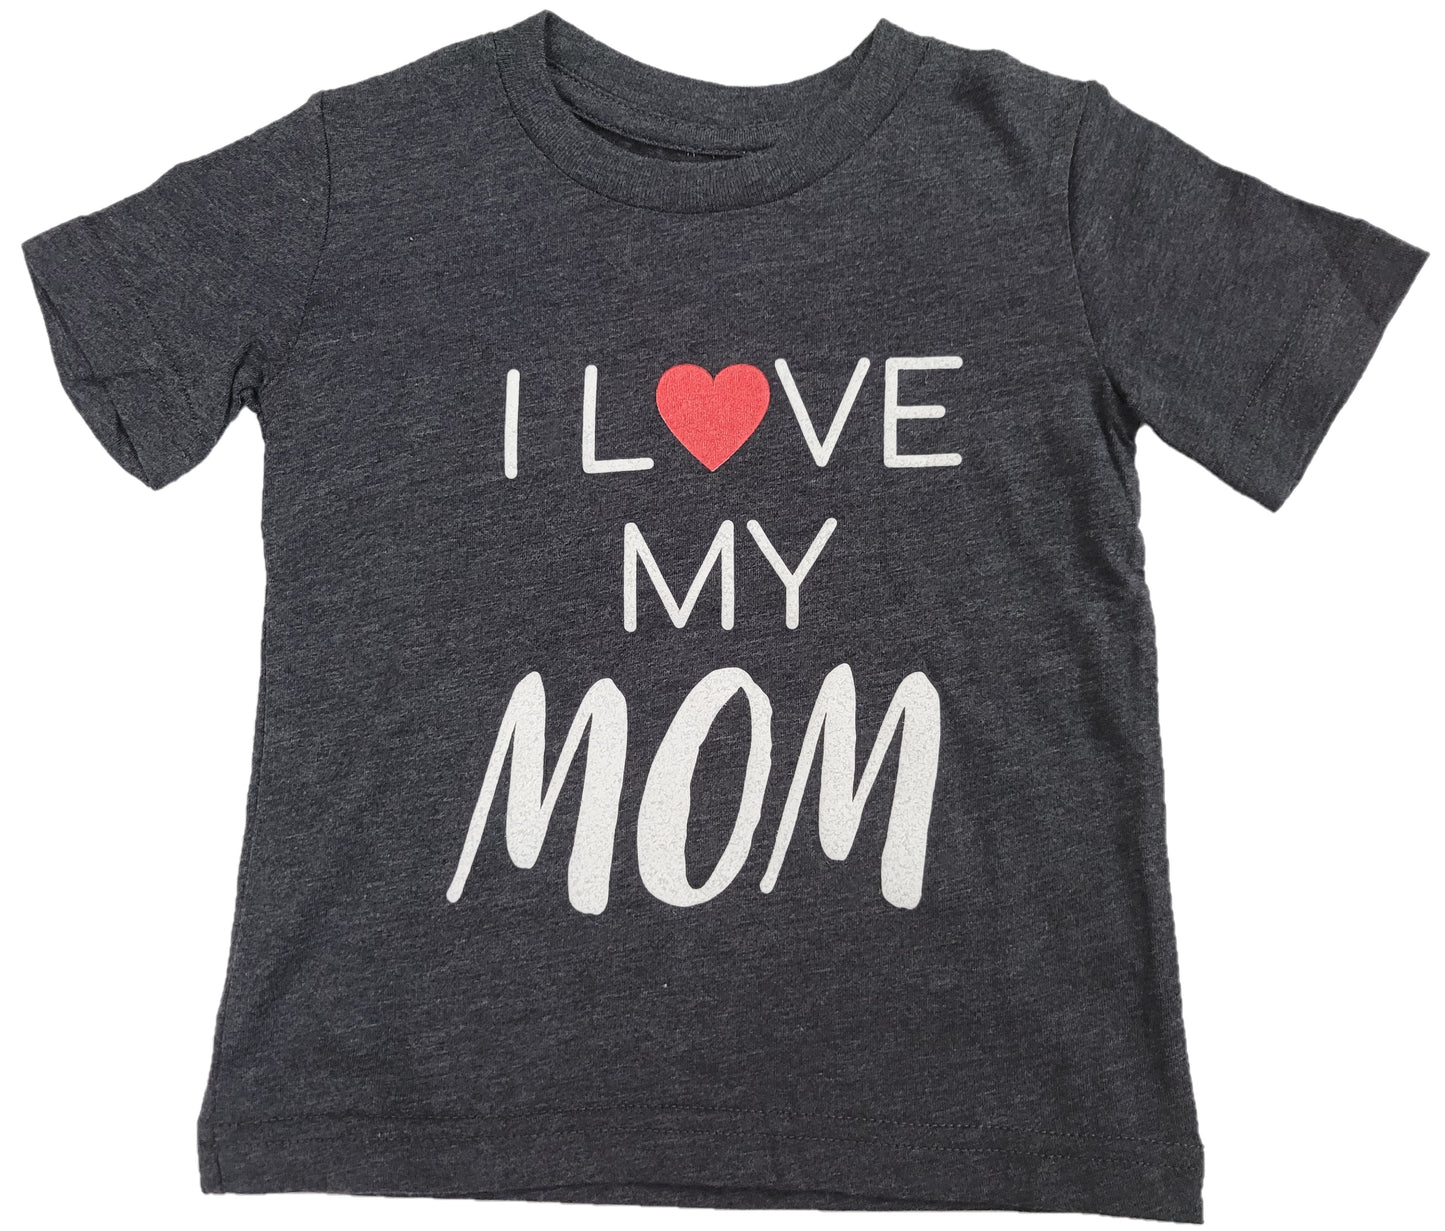 I Love My Mom Heart Boys Infant T-Shirt 12M 18M 24M